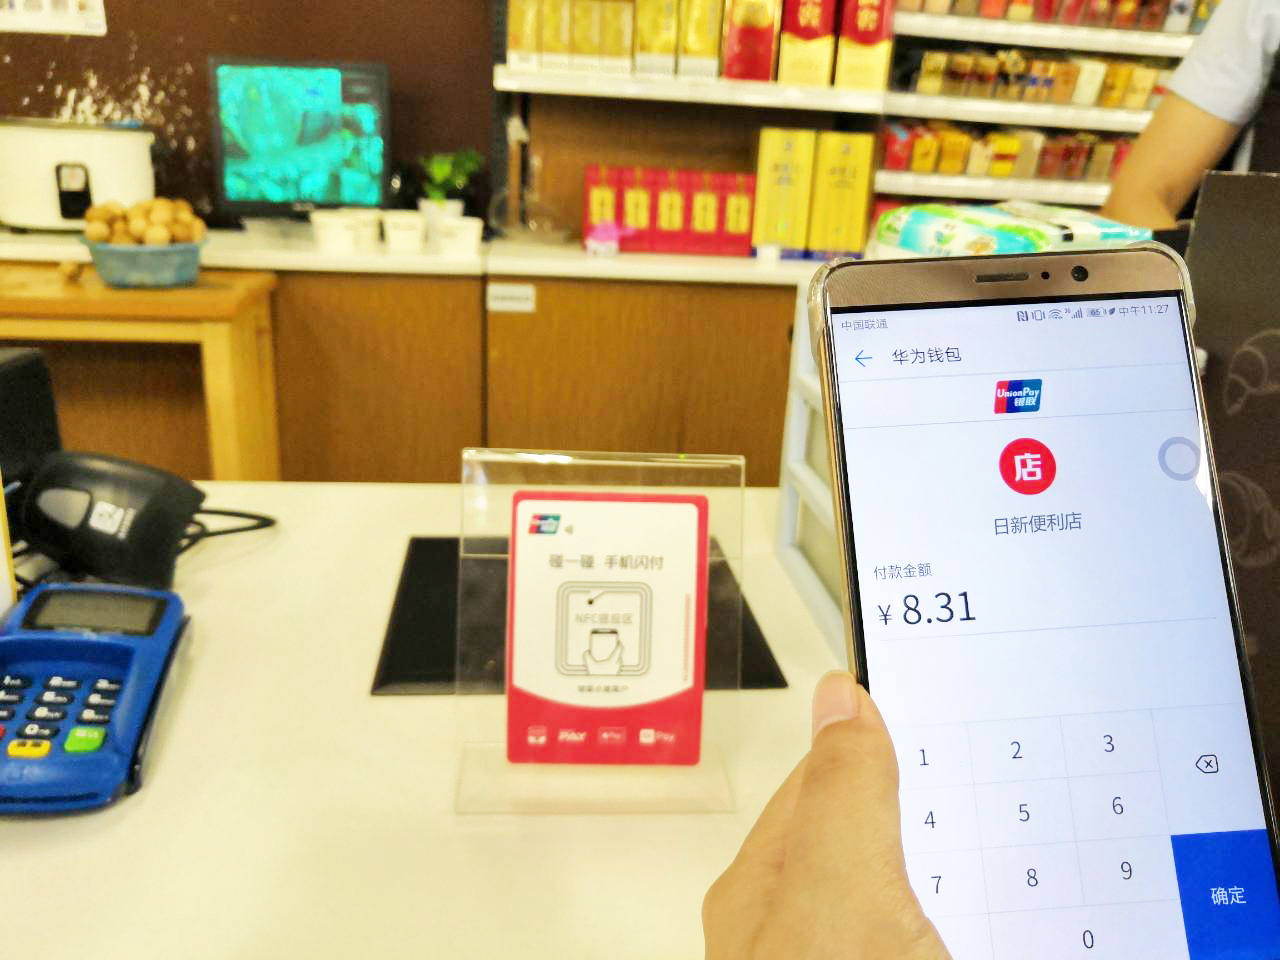 Huawei Pay创立三周年，都出示了什么基本功能